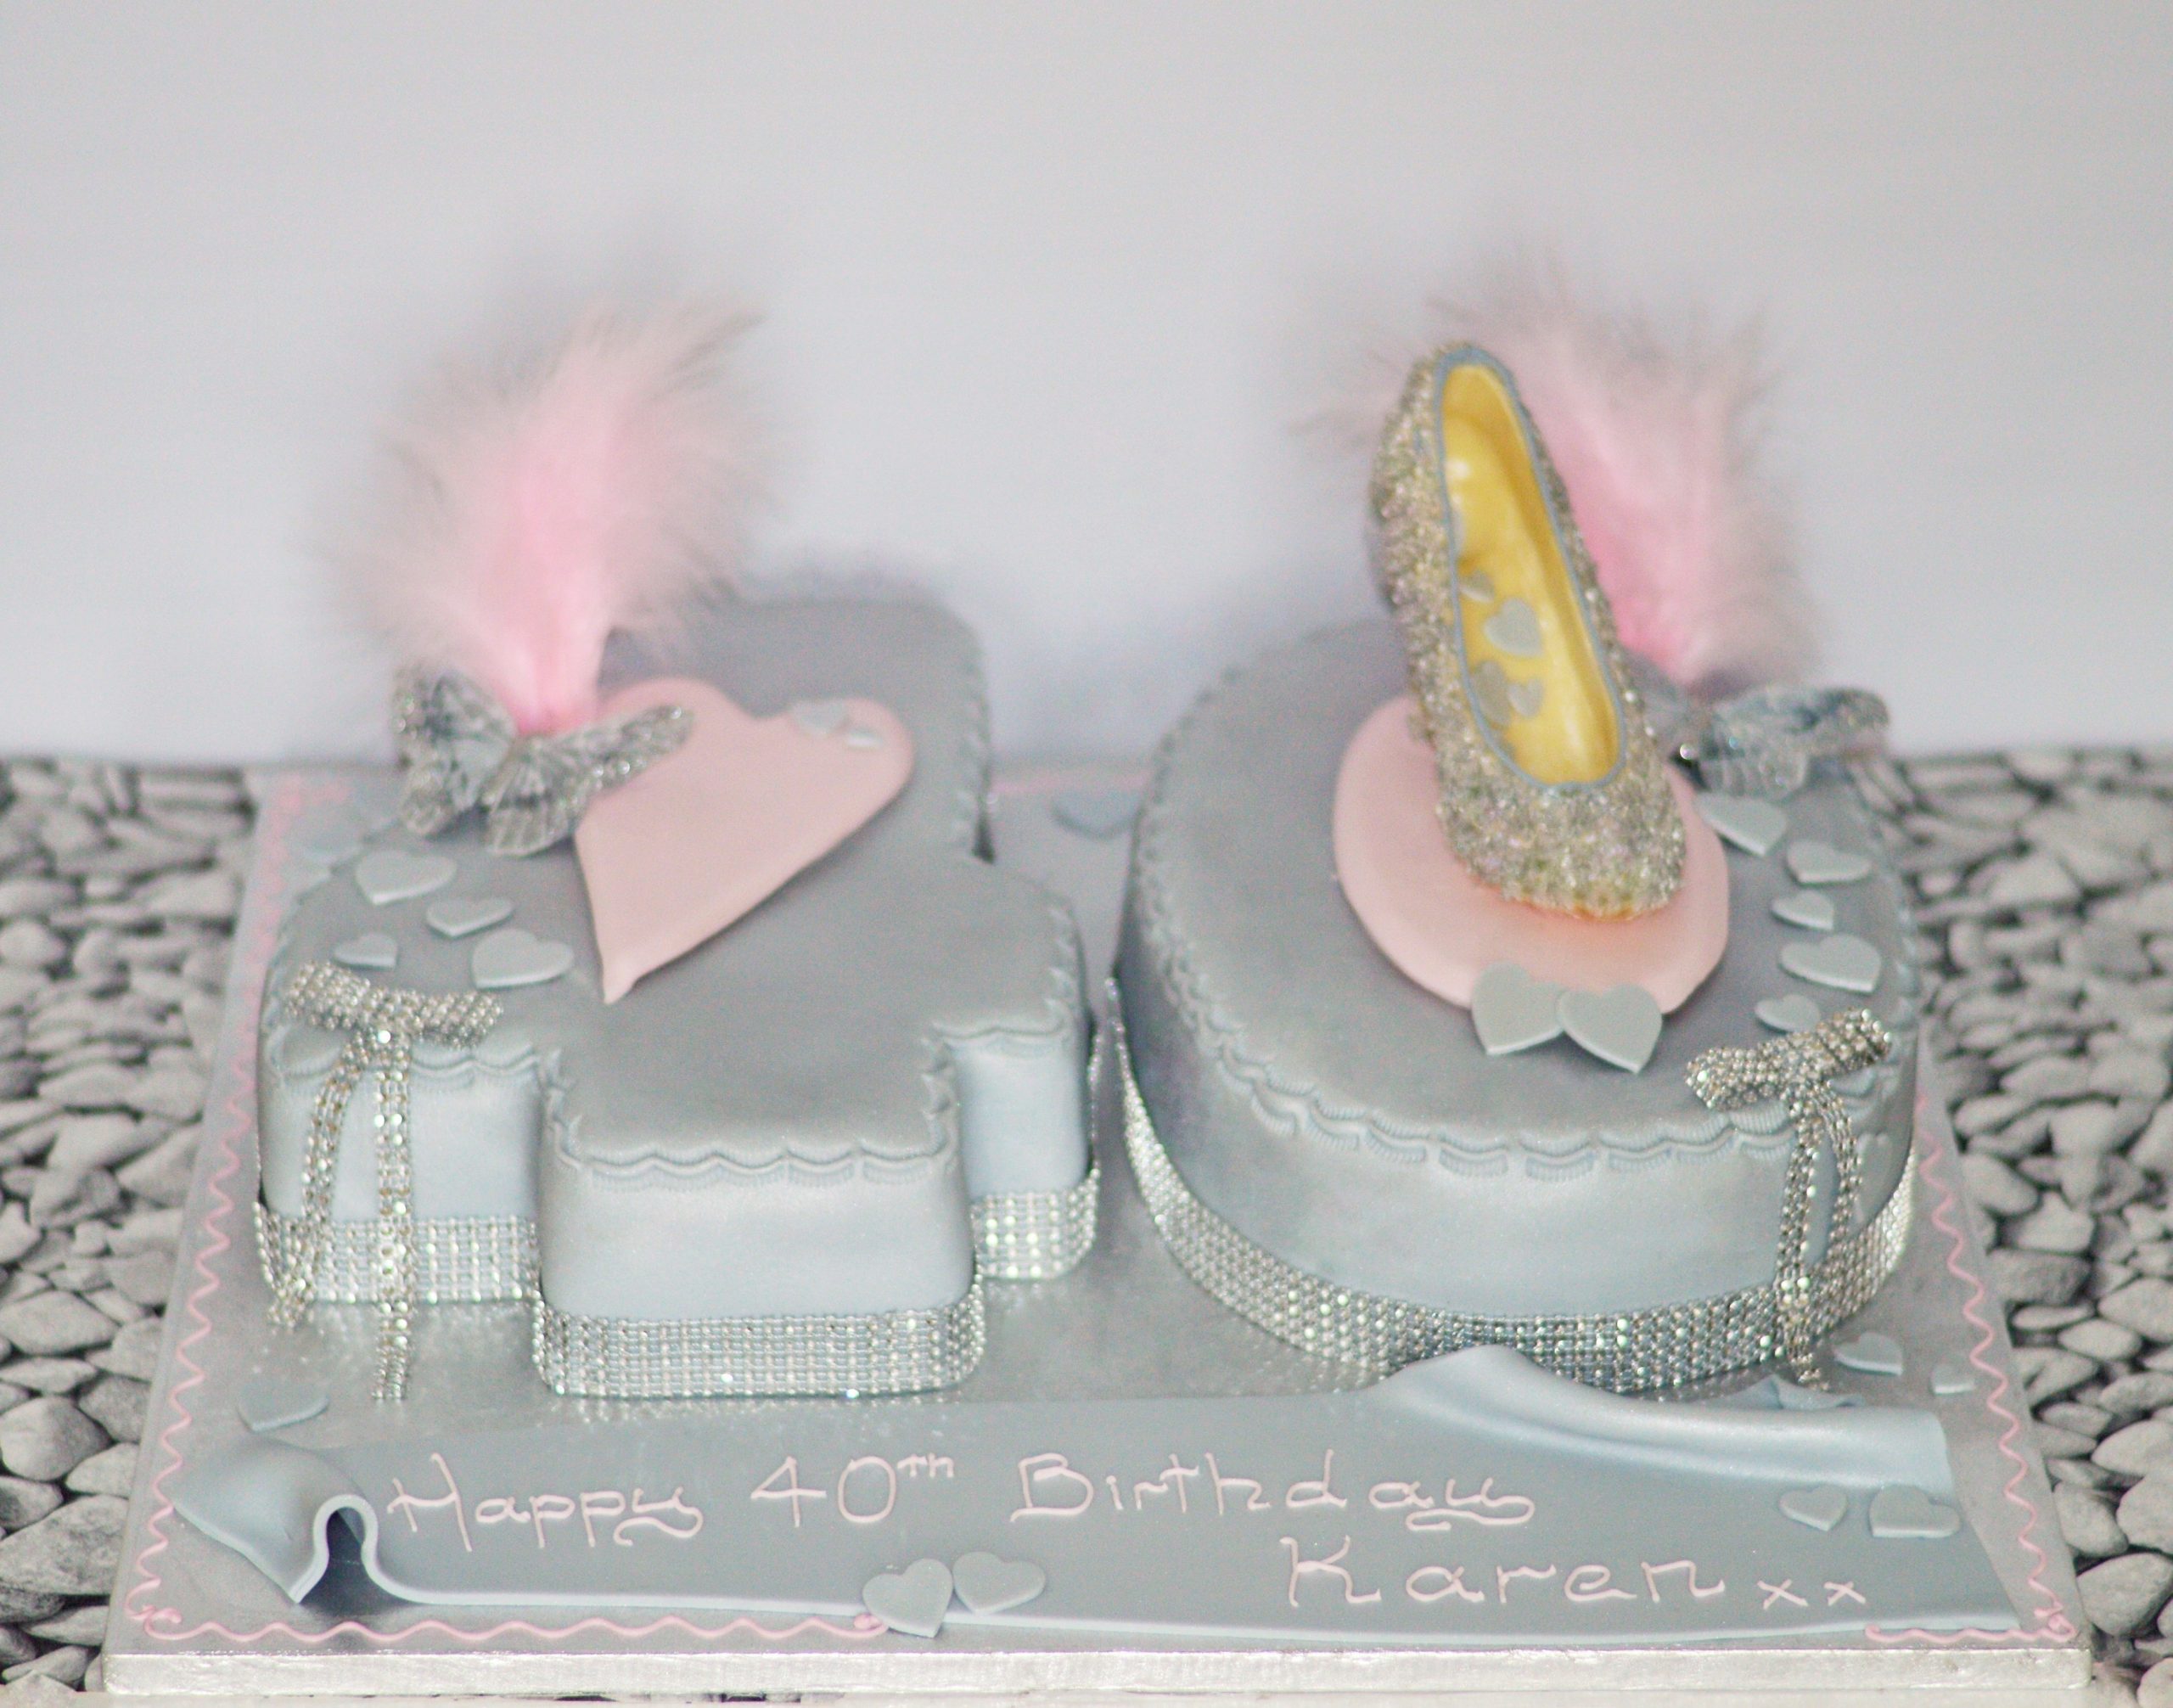 Handmade Realistic Chocolate shoe - Cake topper - Wedding bridesmaid gift  ideas | eBay